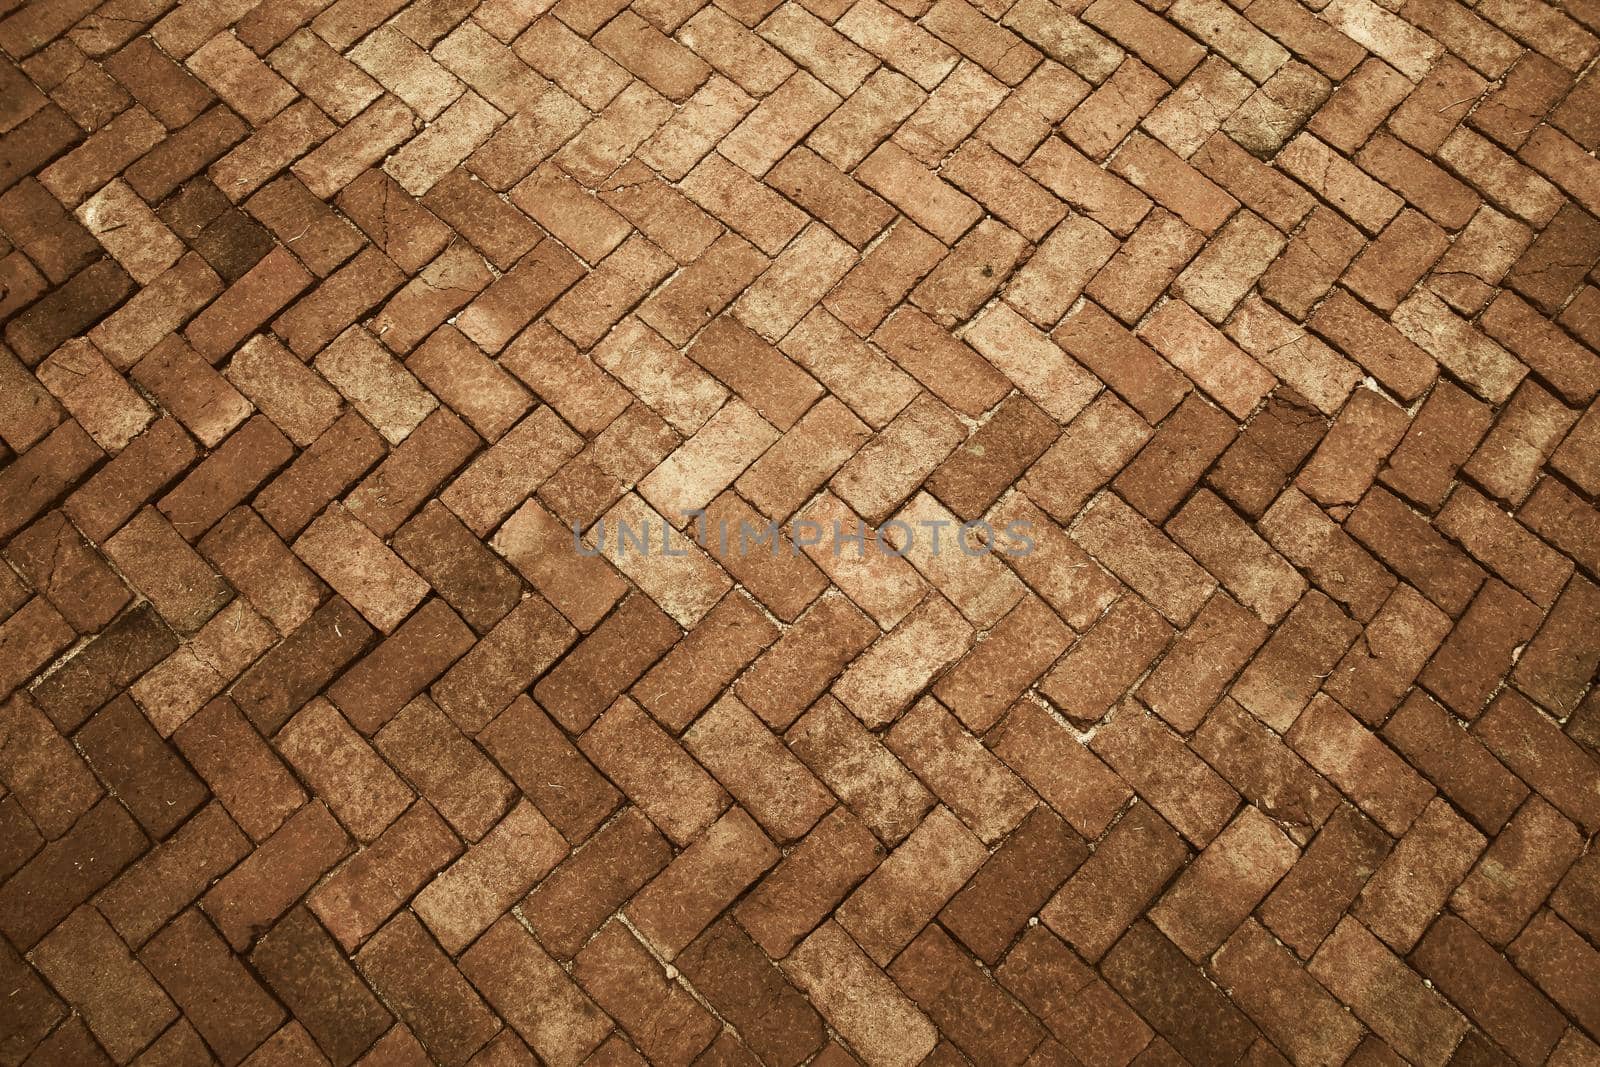 Ancient dark and light clay tone brick floor pavement stones luxury wall by Darkfox